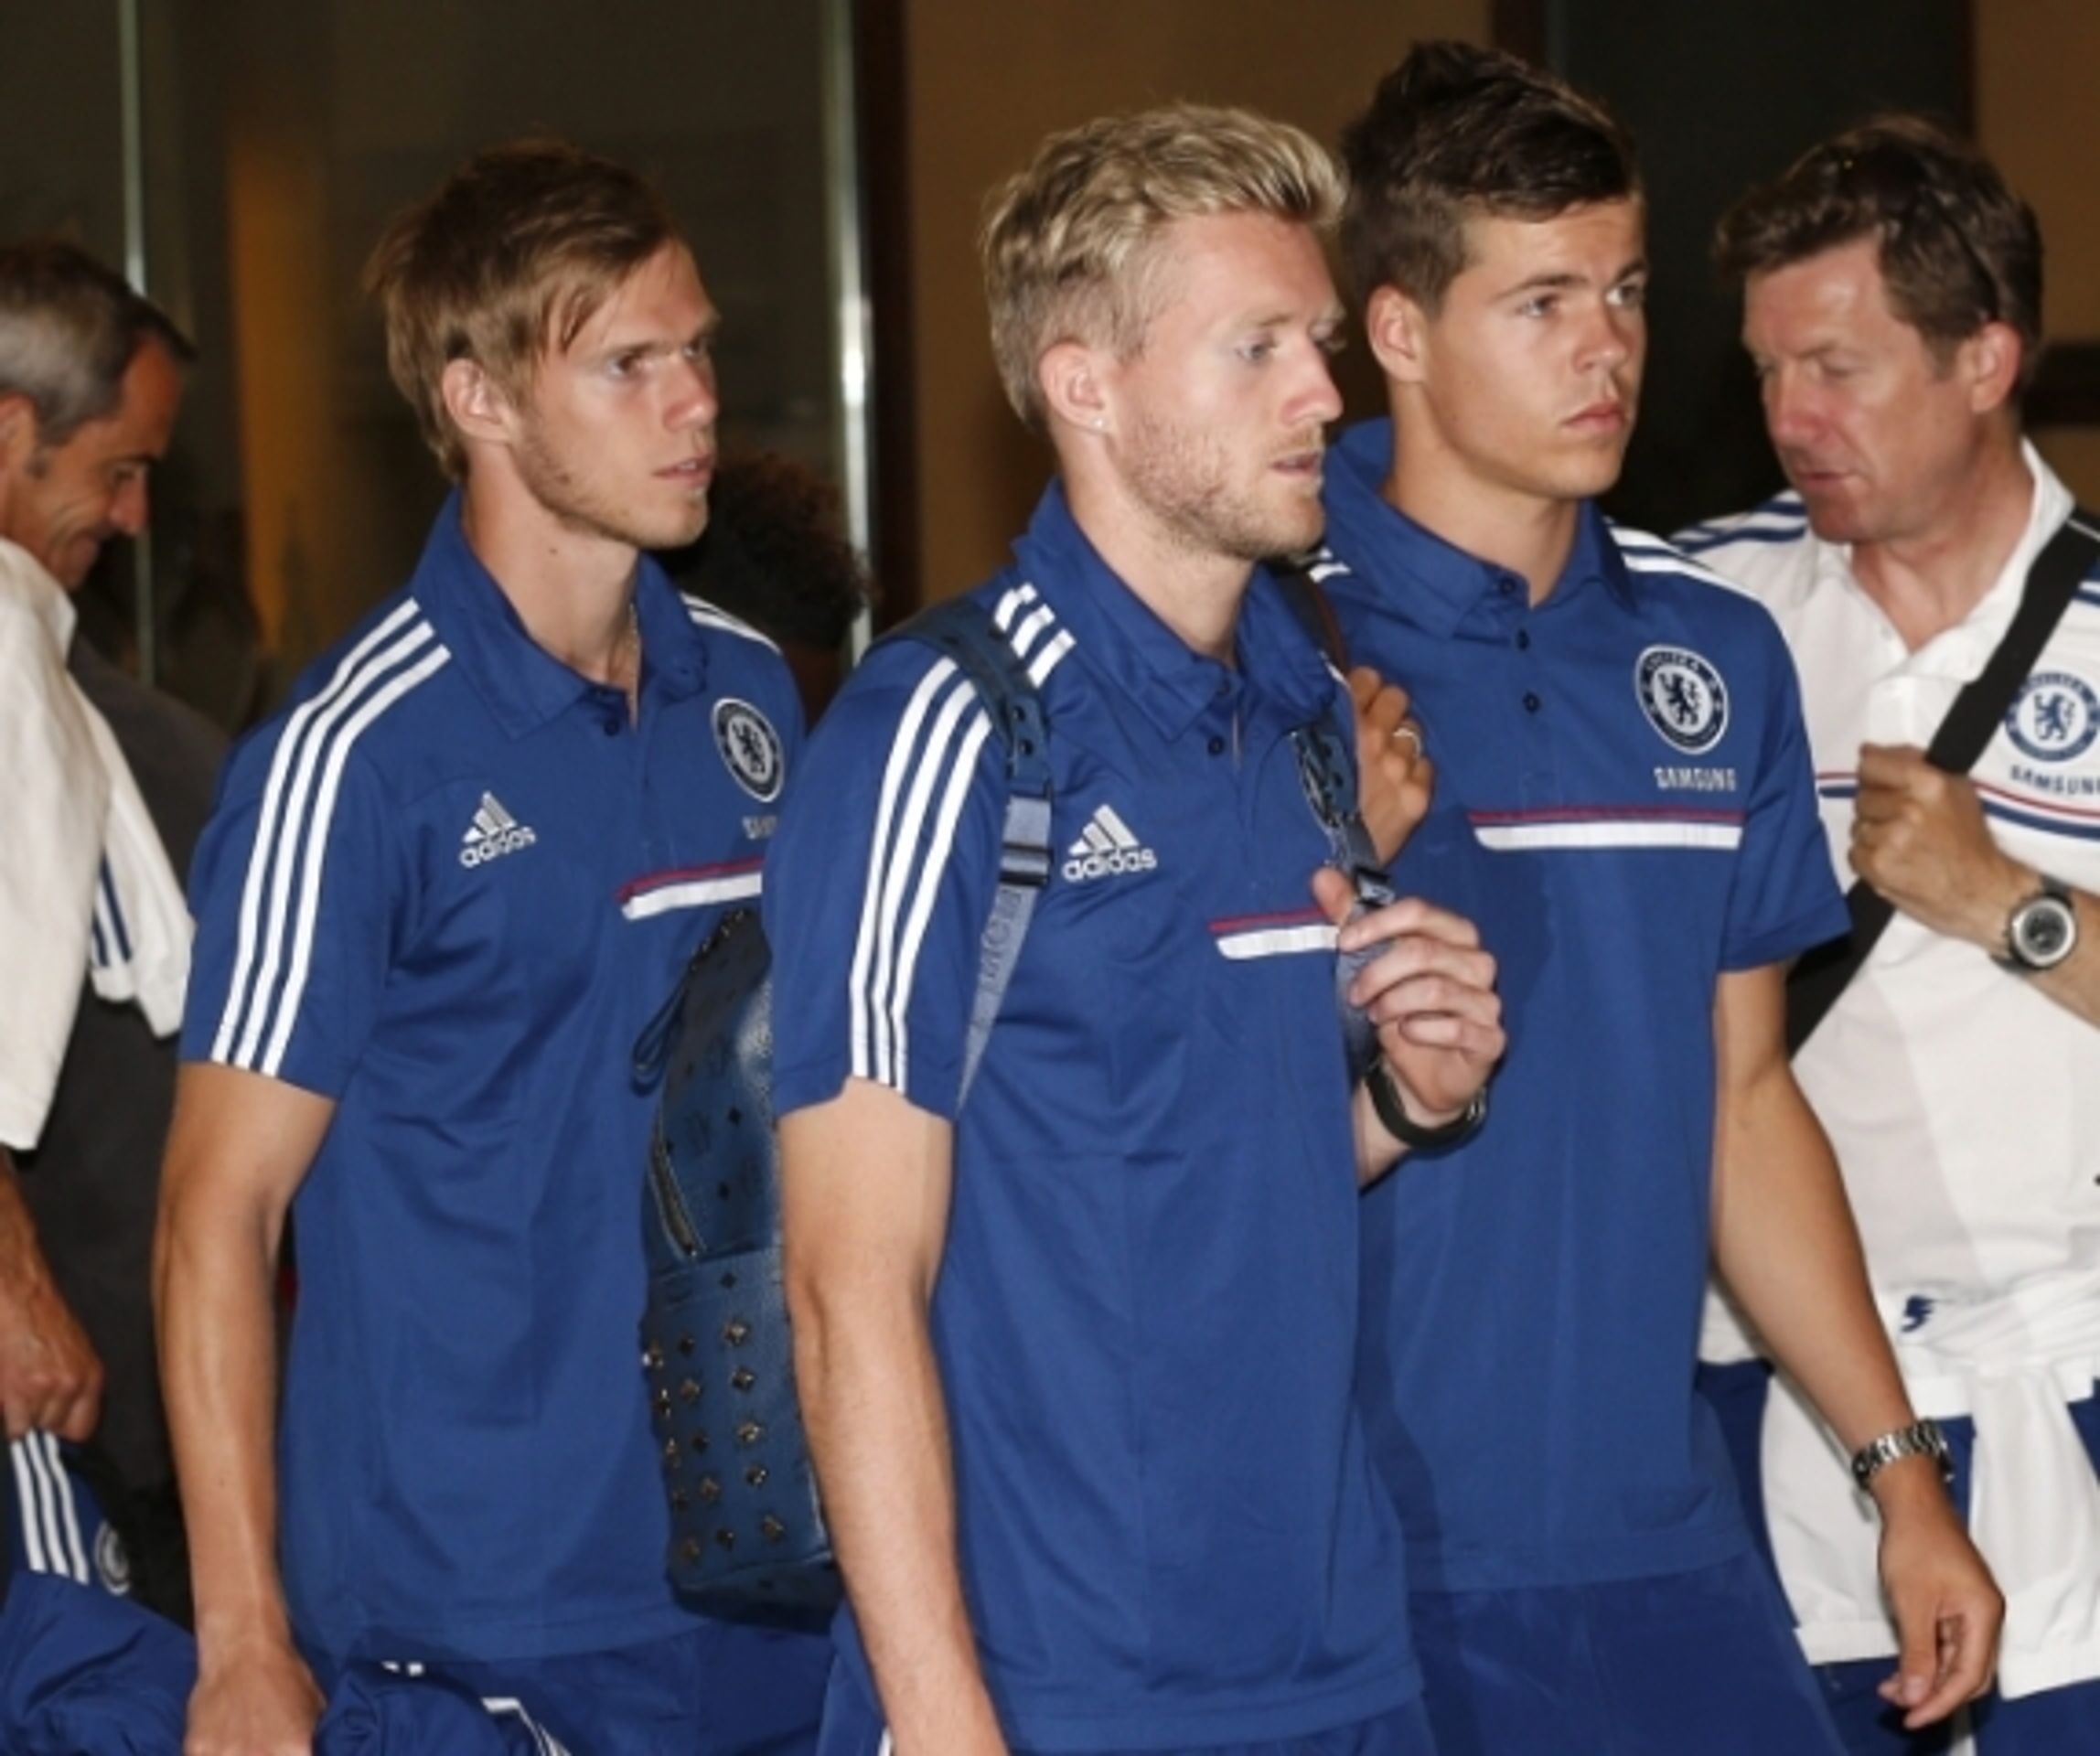 Chelsea v Bangkoku - 7 - GALERIE: Chelsea v Bangkoku s Mourinhem, Čechem i Kalasem (1/10)